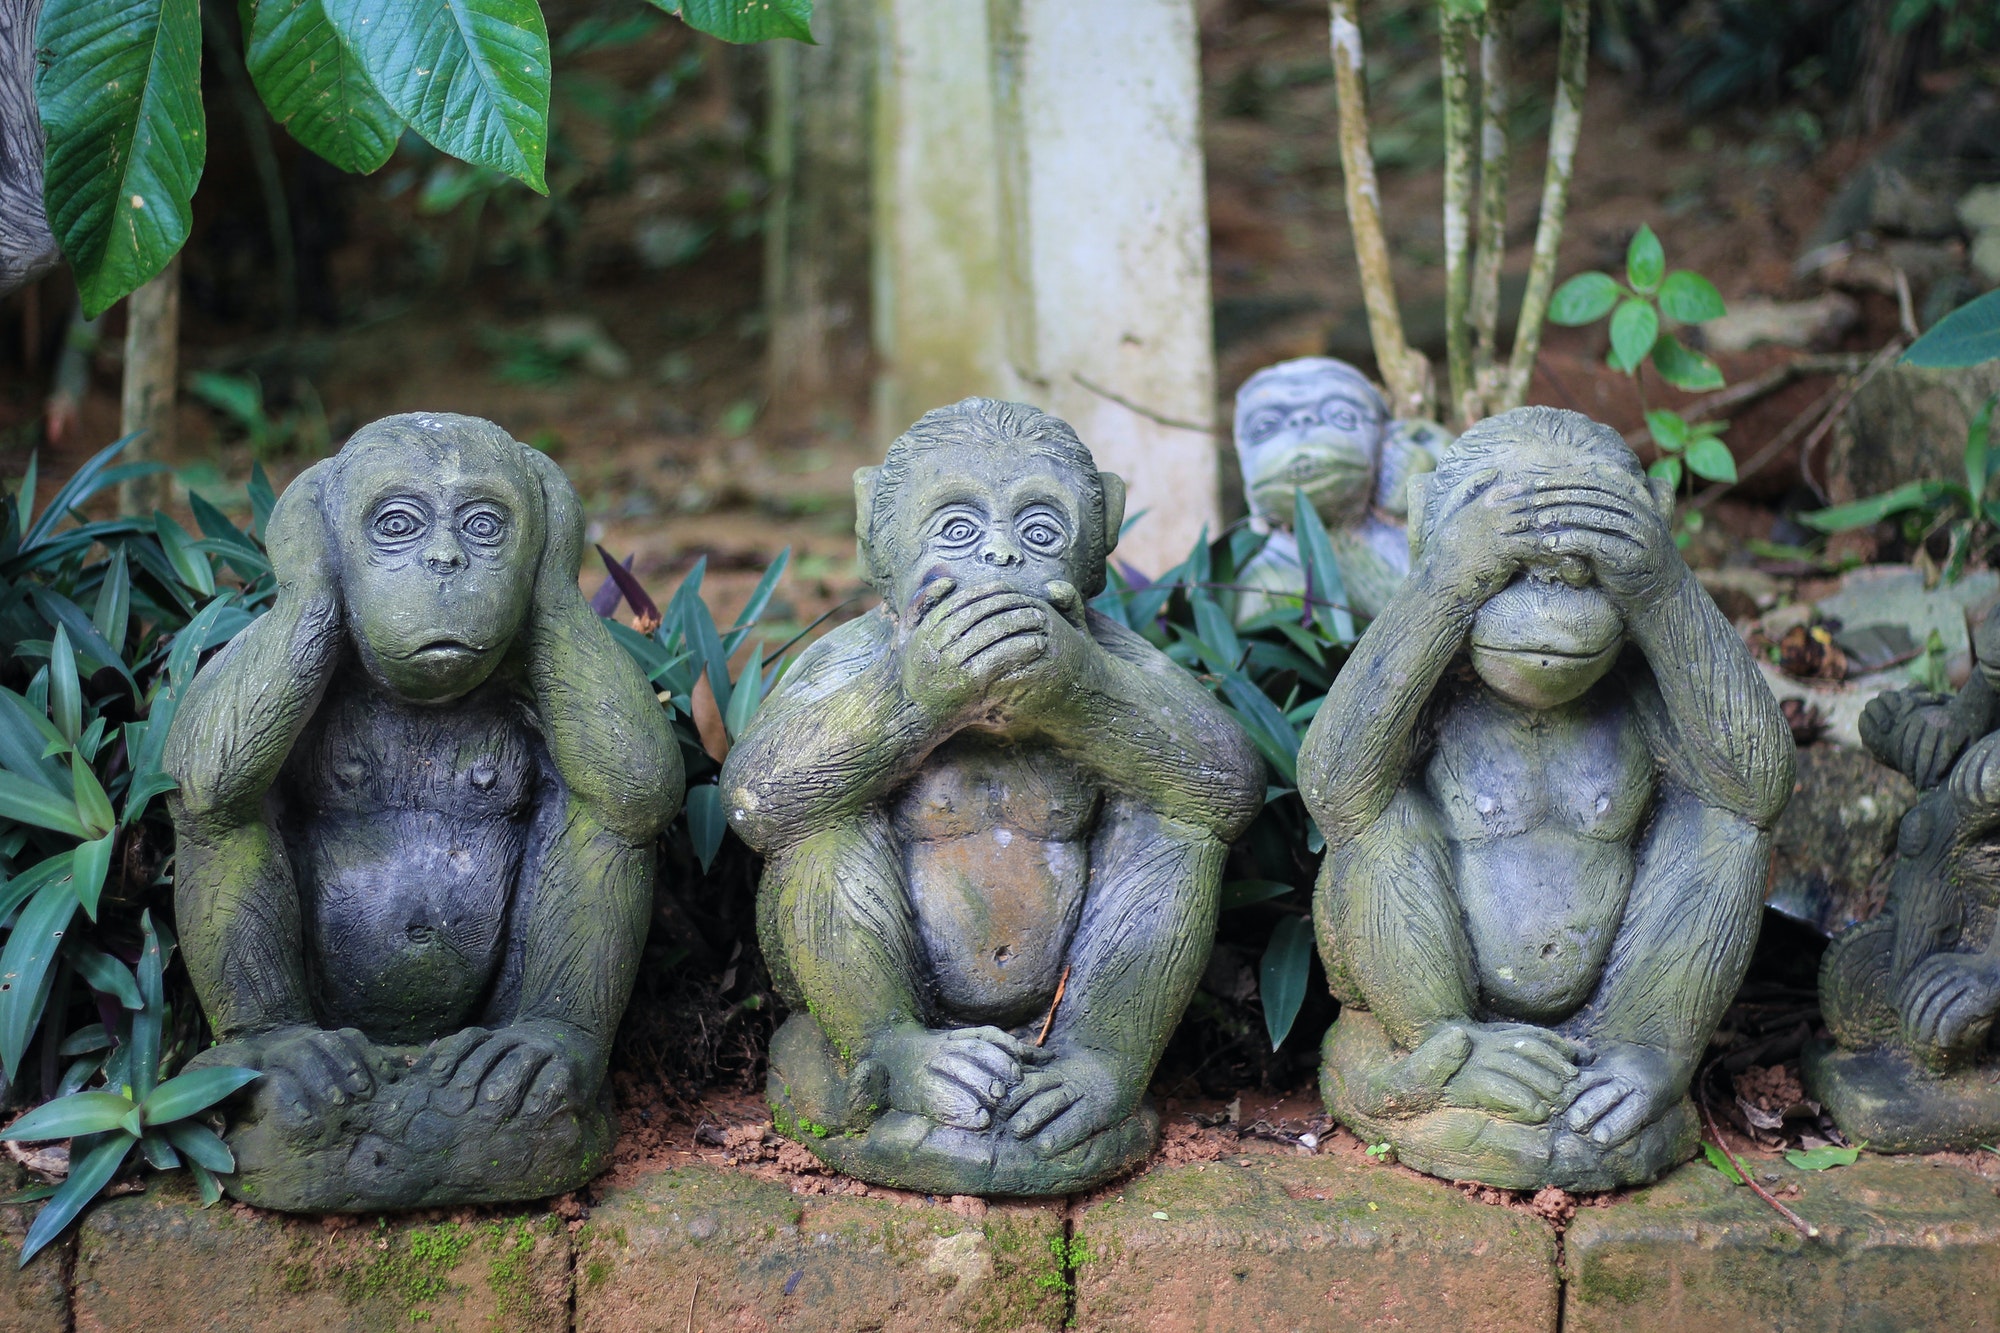 Three Wise Monkeys - See No Evil, Hear No Evil, Speak No Evil